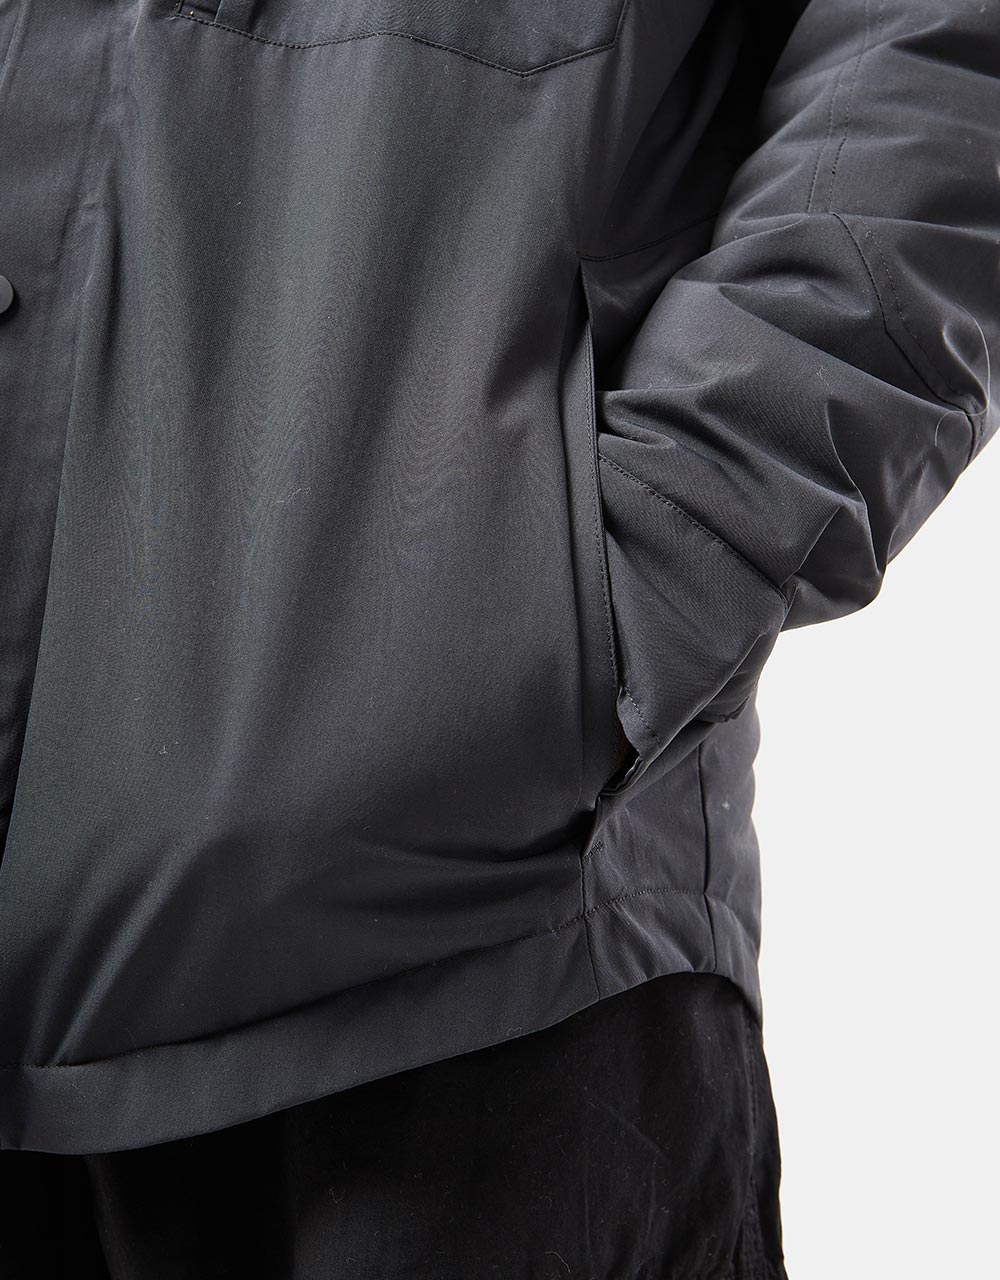 FW Catalyst Insulated Shirt/Jacket - Black